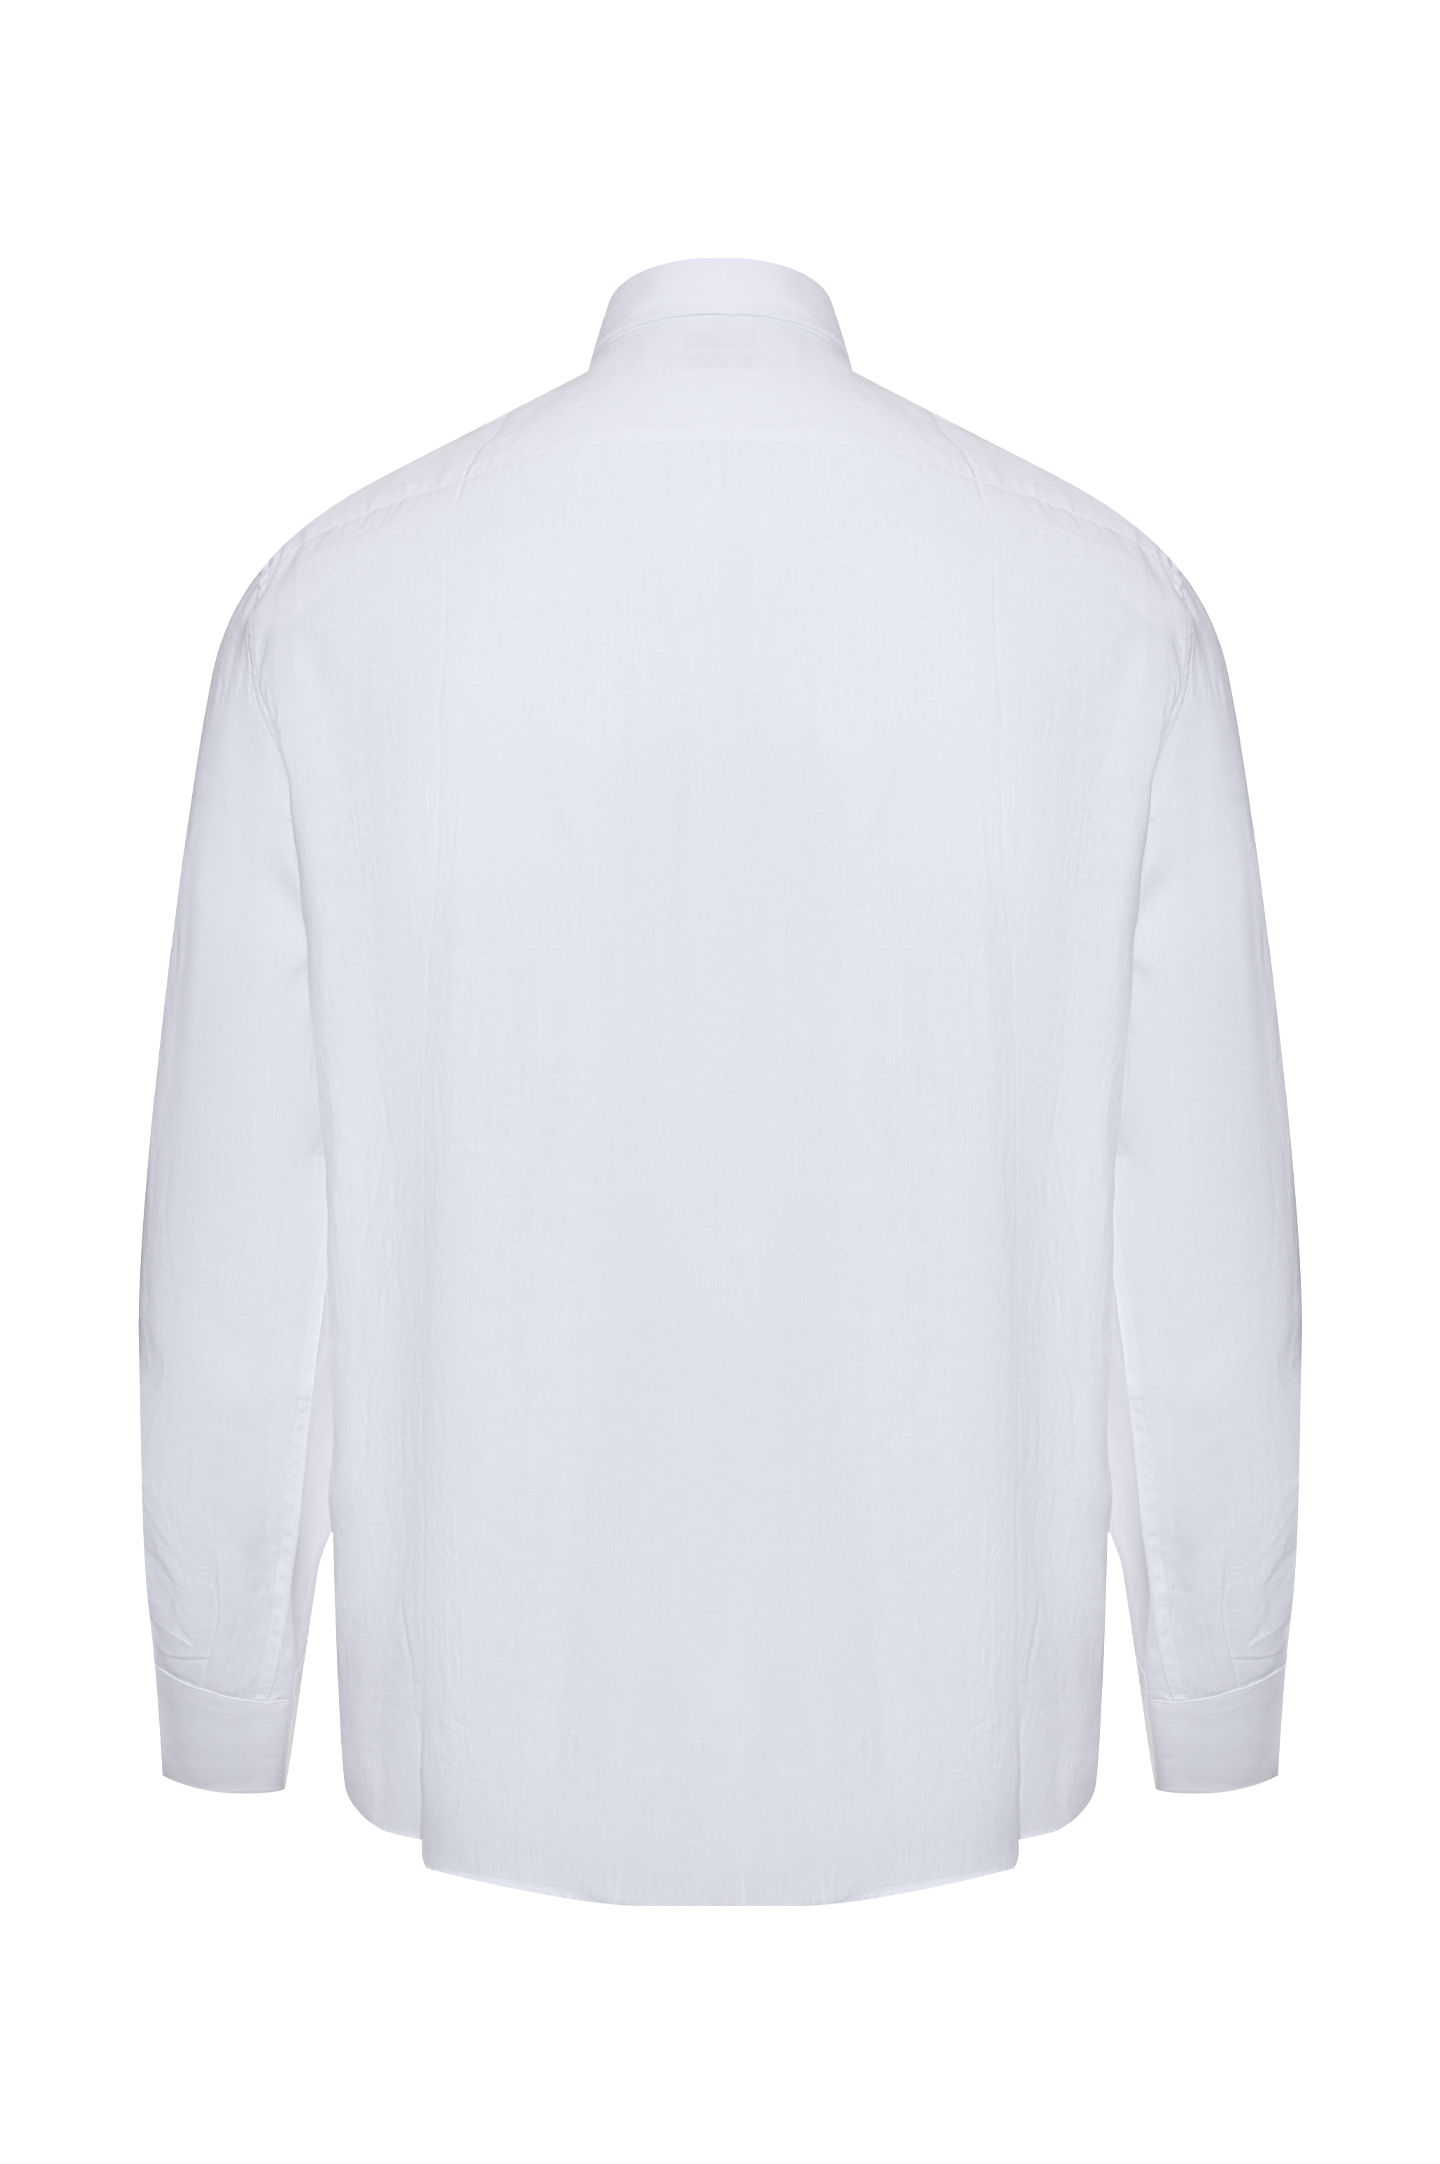 Рубашка BRUNELLO  CUCINELLI MQ6590626, цвет: Белый, Мужской